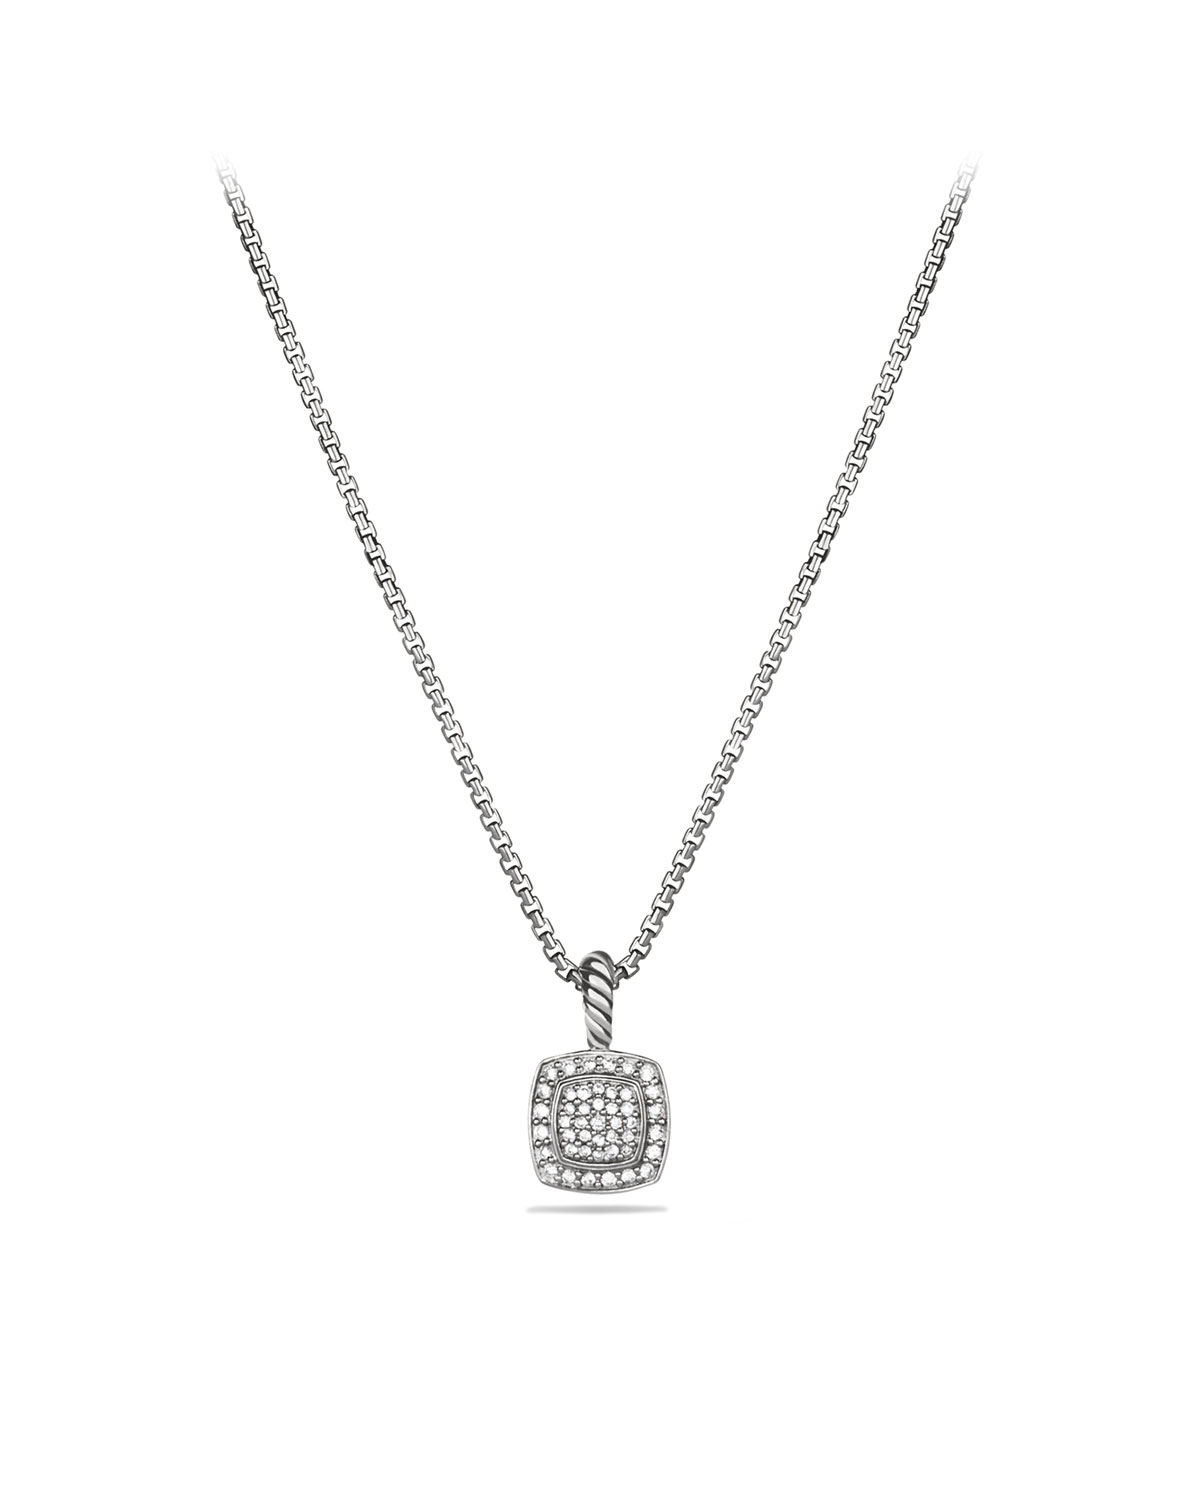 Petite Albion Pendant with Diamonds on Chain